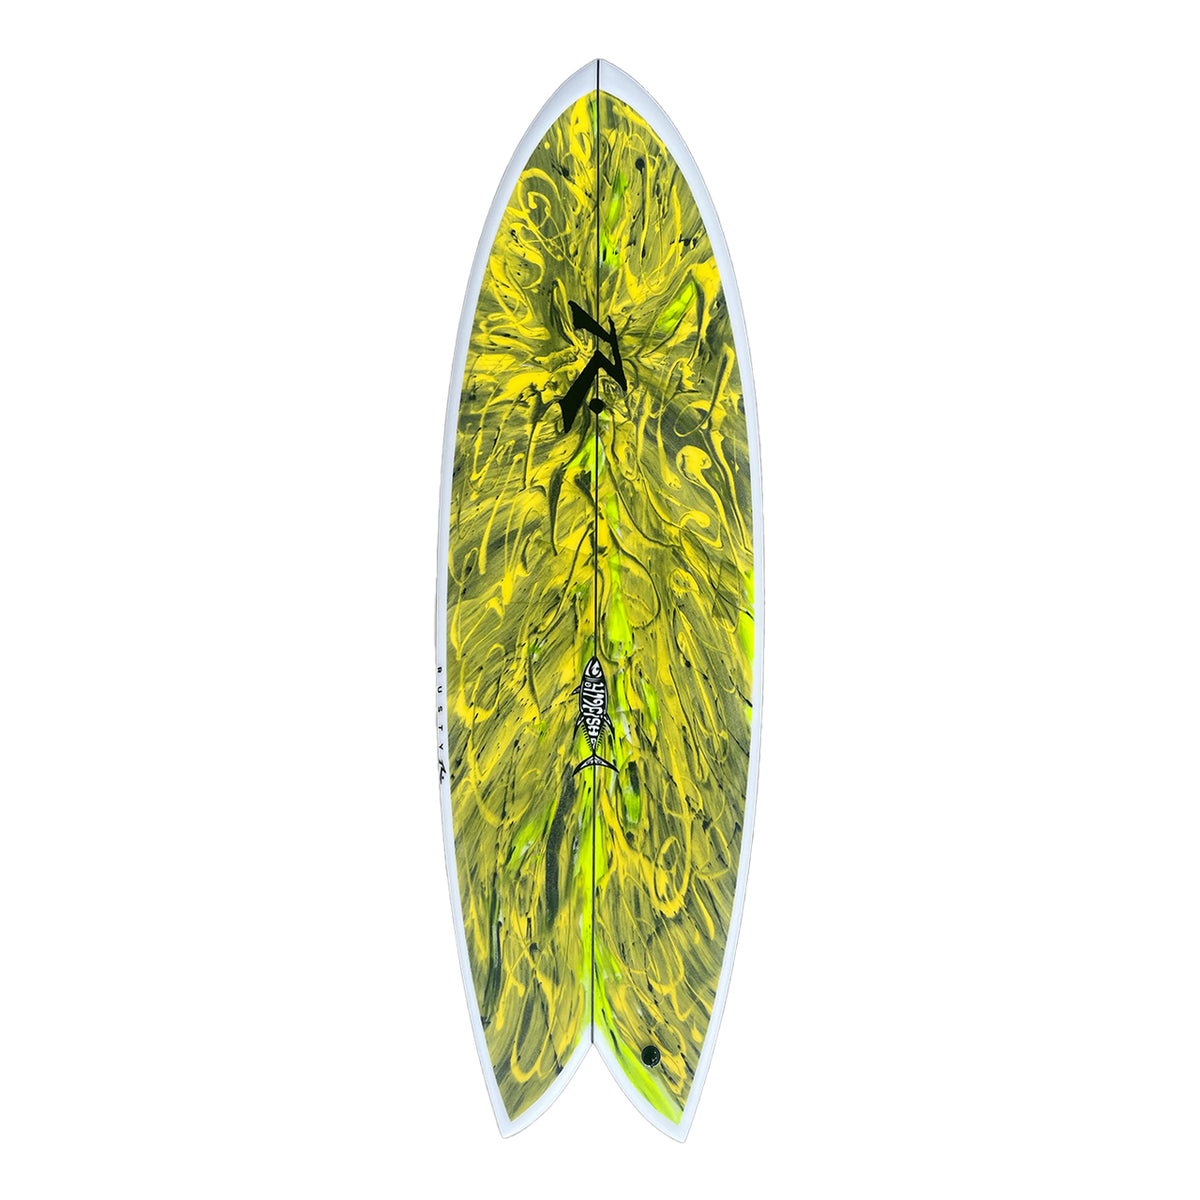 419fish - Alternative - Rusty Surfboards - Top View - Yellow Gold Swirl